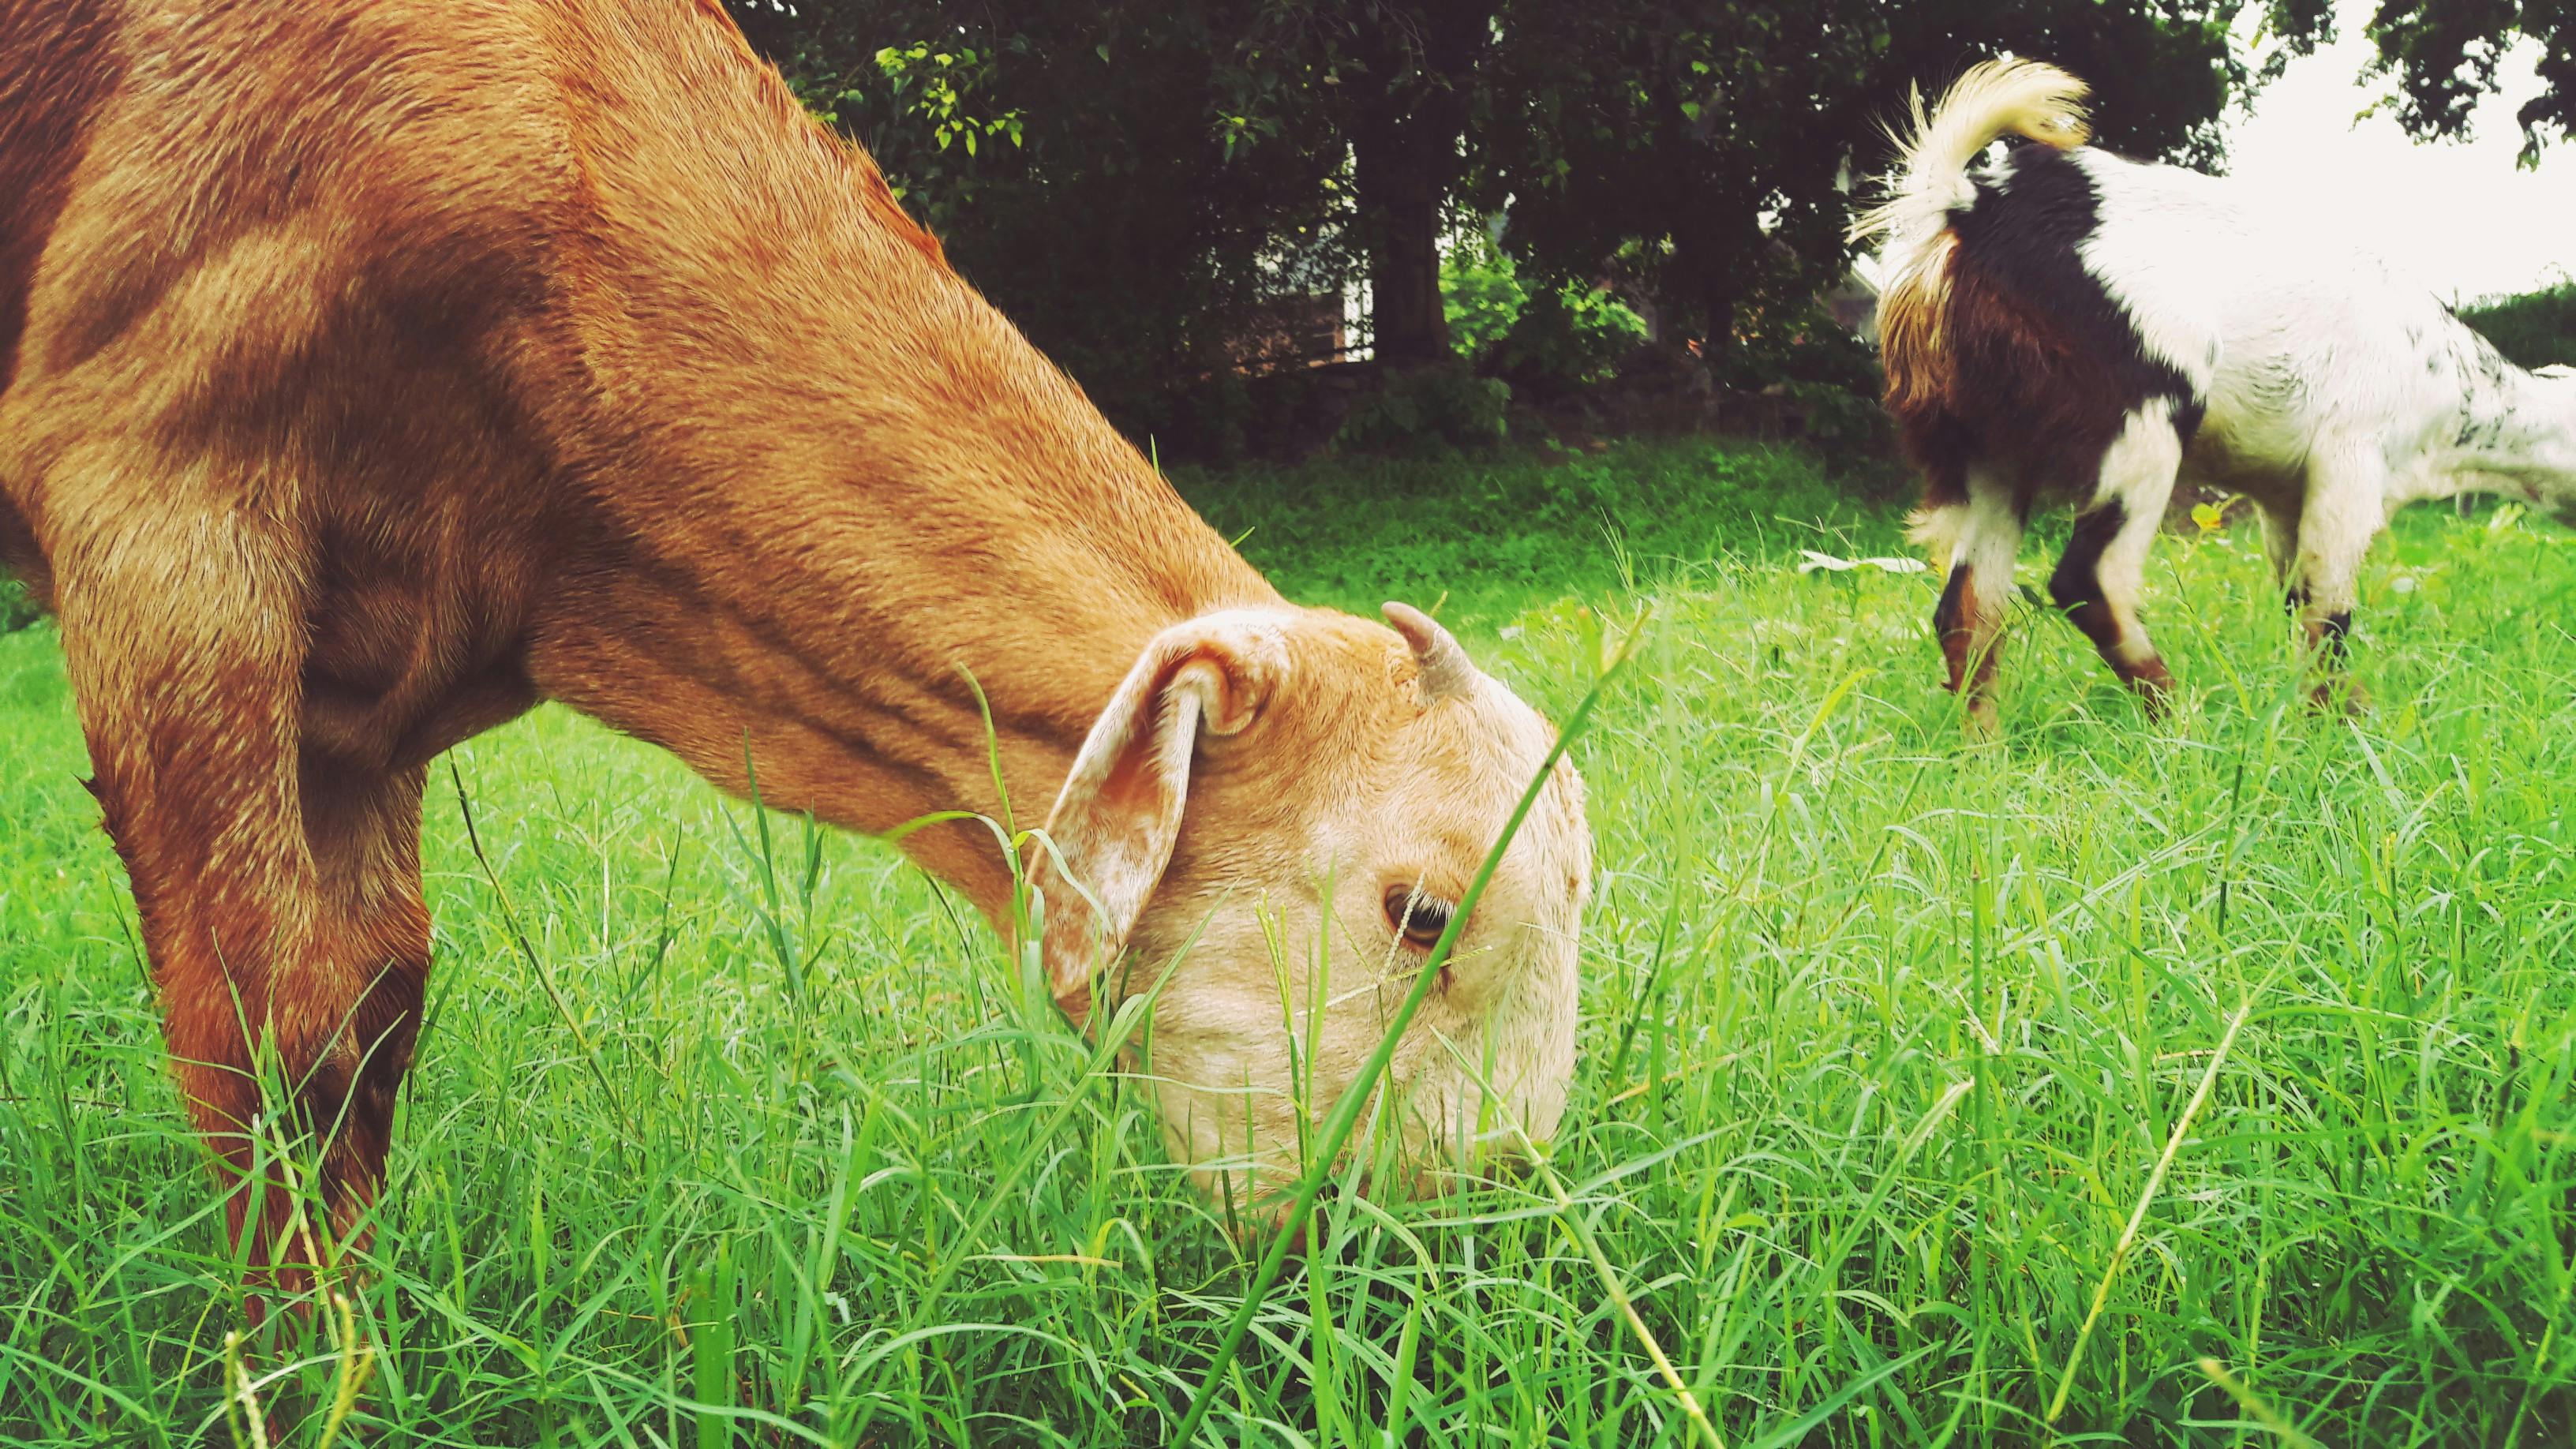 Brown Animal Eating Green Grass · Free Stock Photo